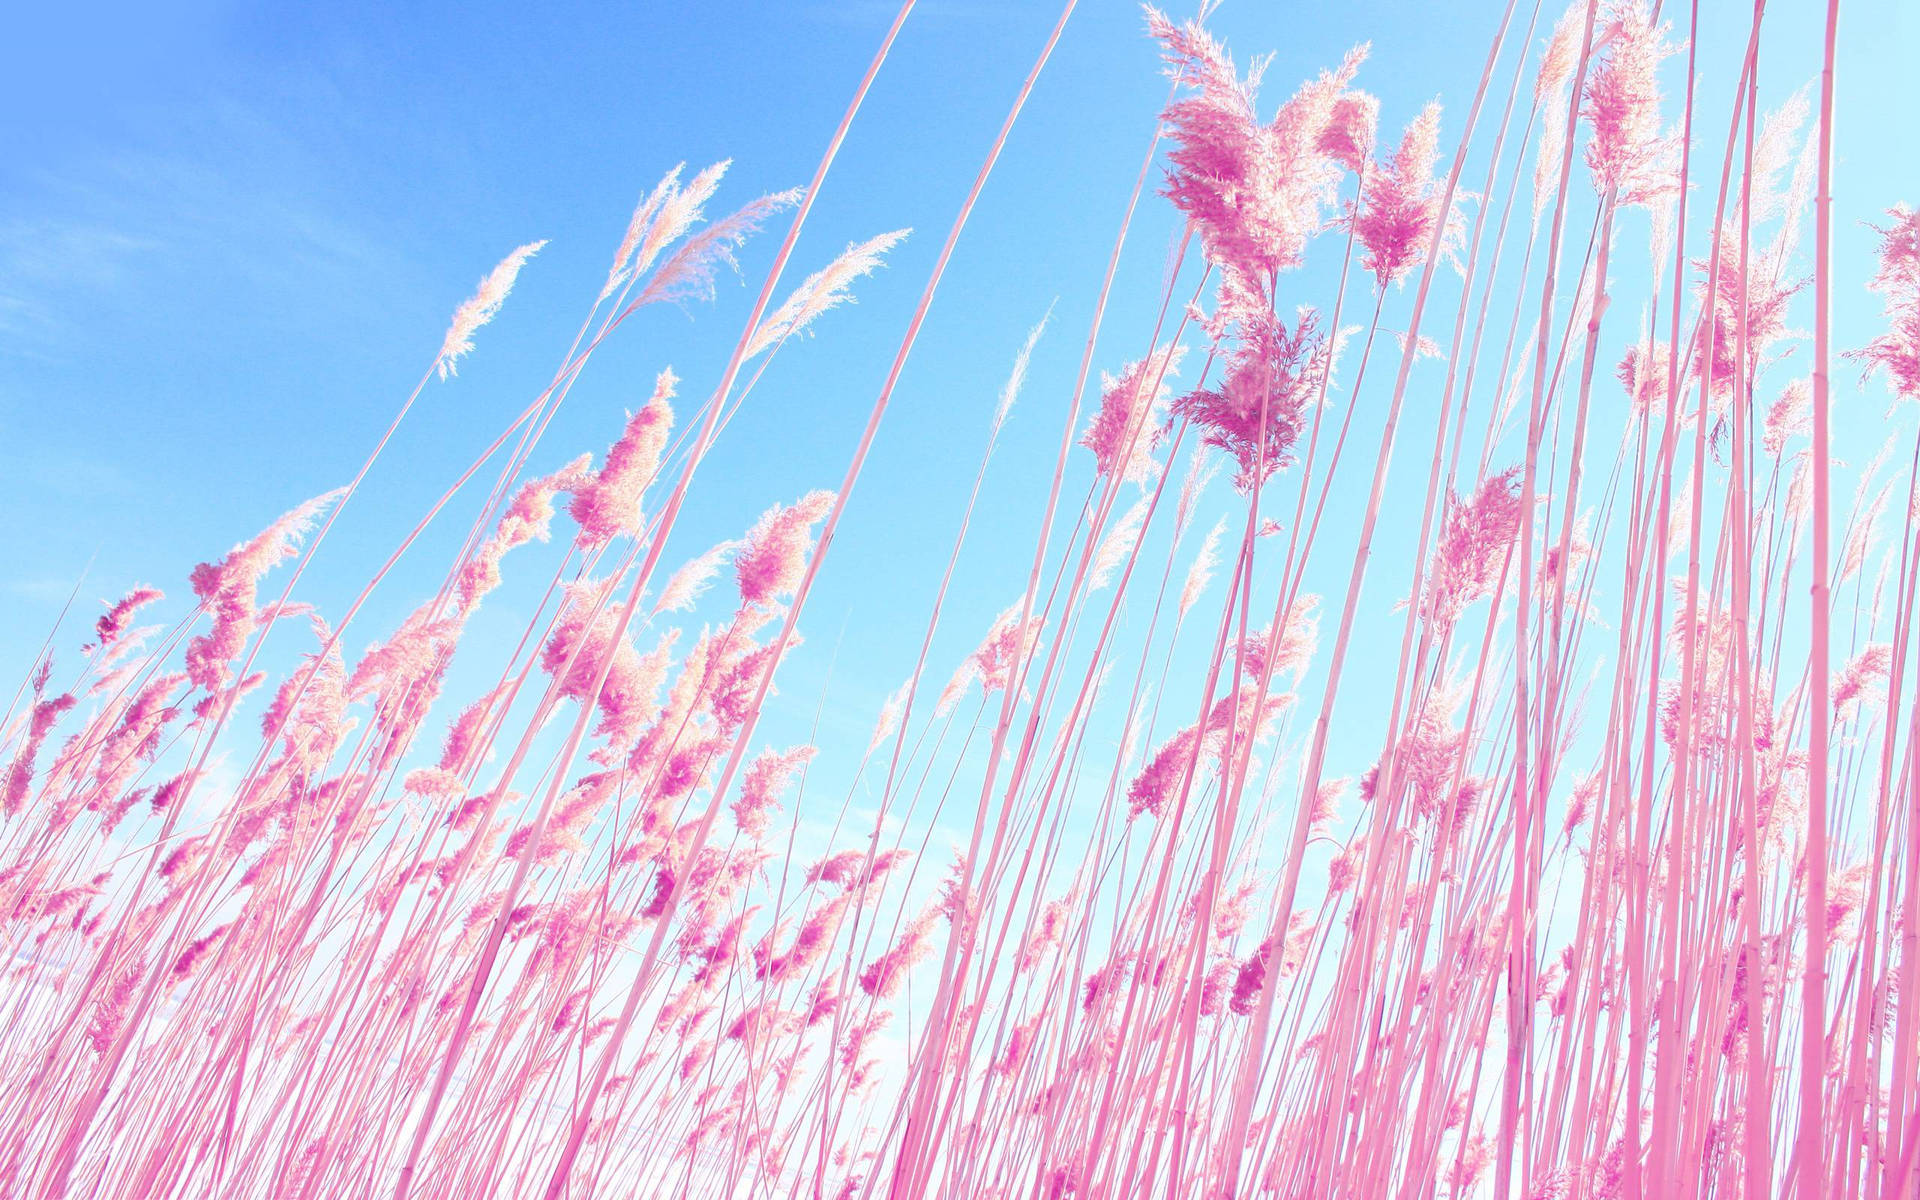 Pink Tall Grasses Under Blue Sky